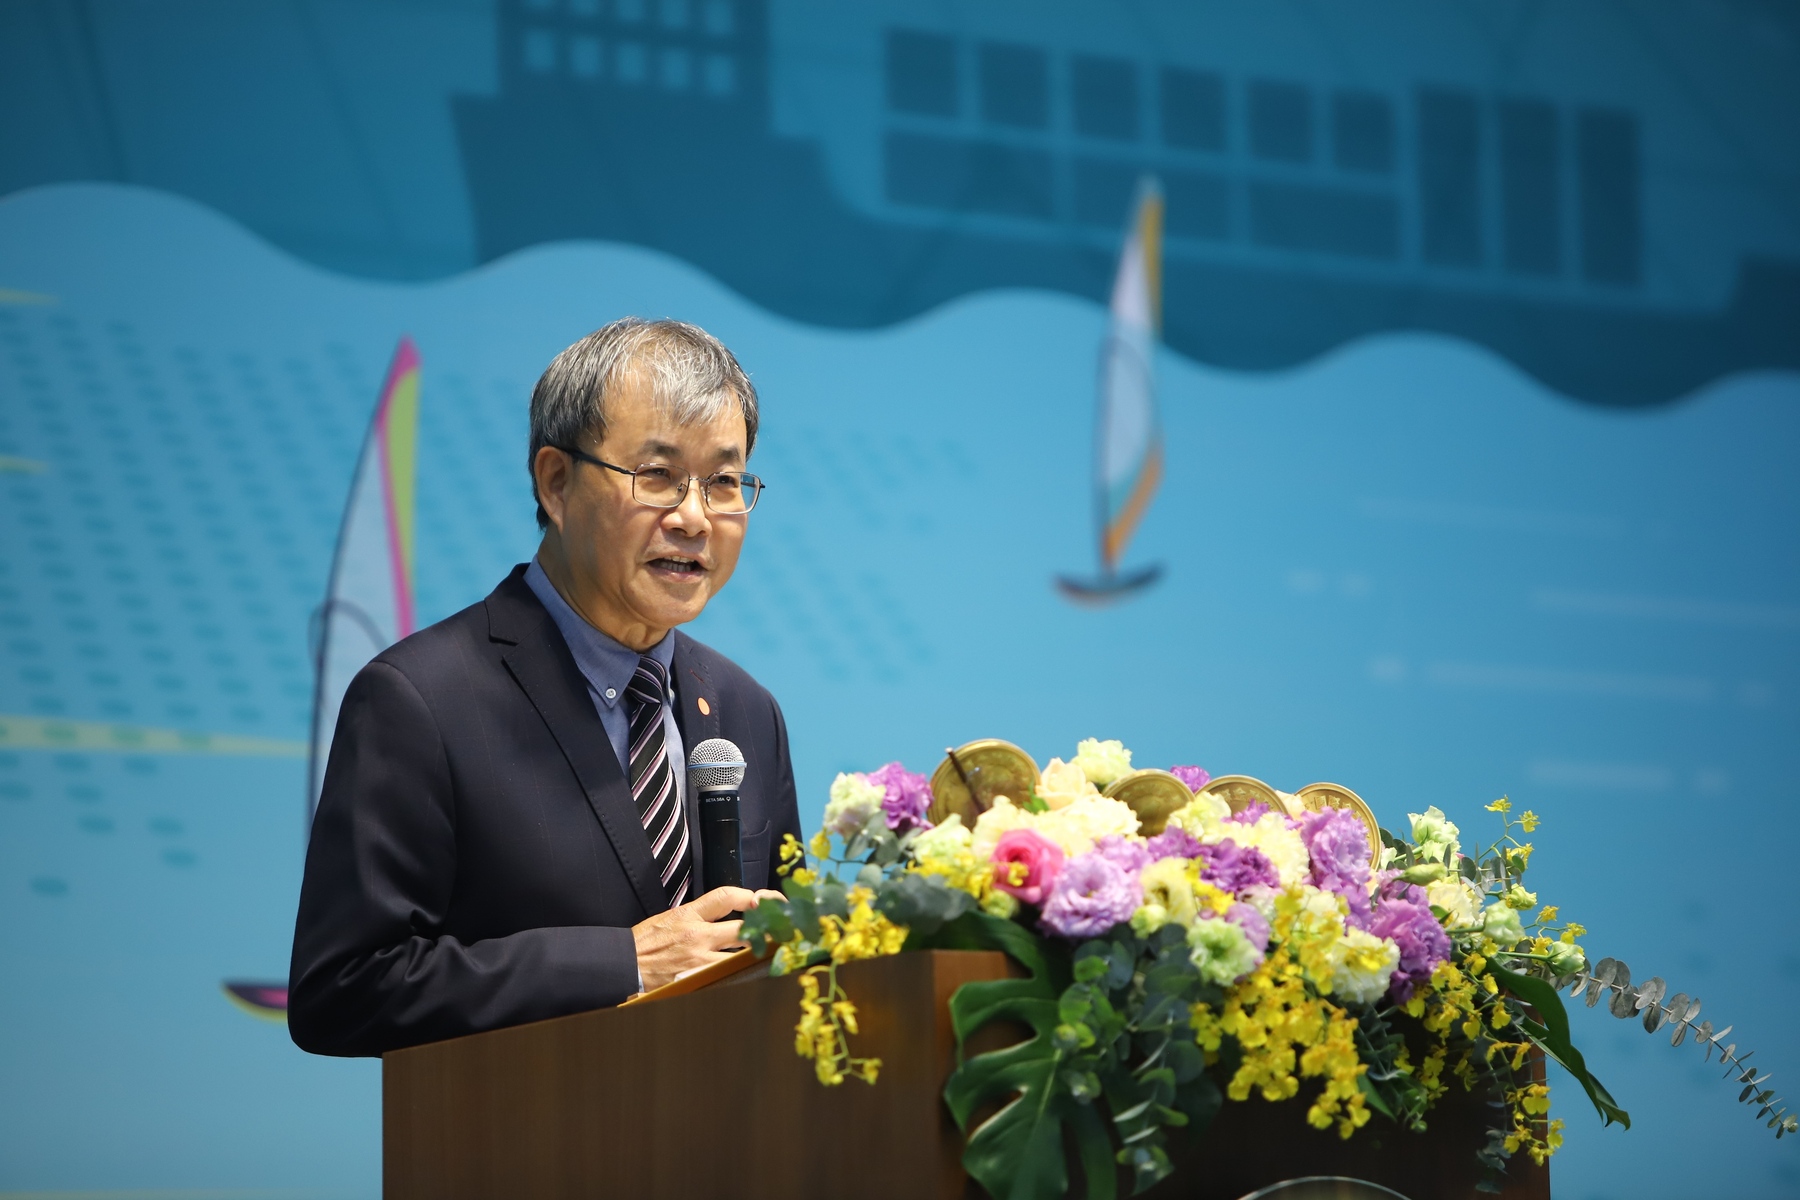 NSYSU President Ying-Yao Cheng